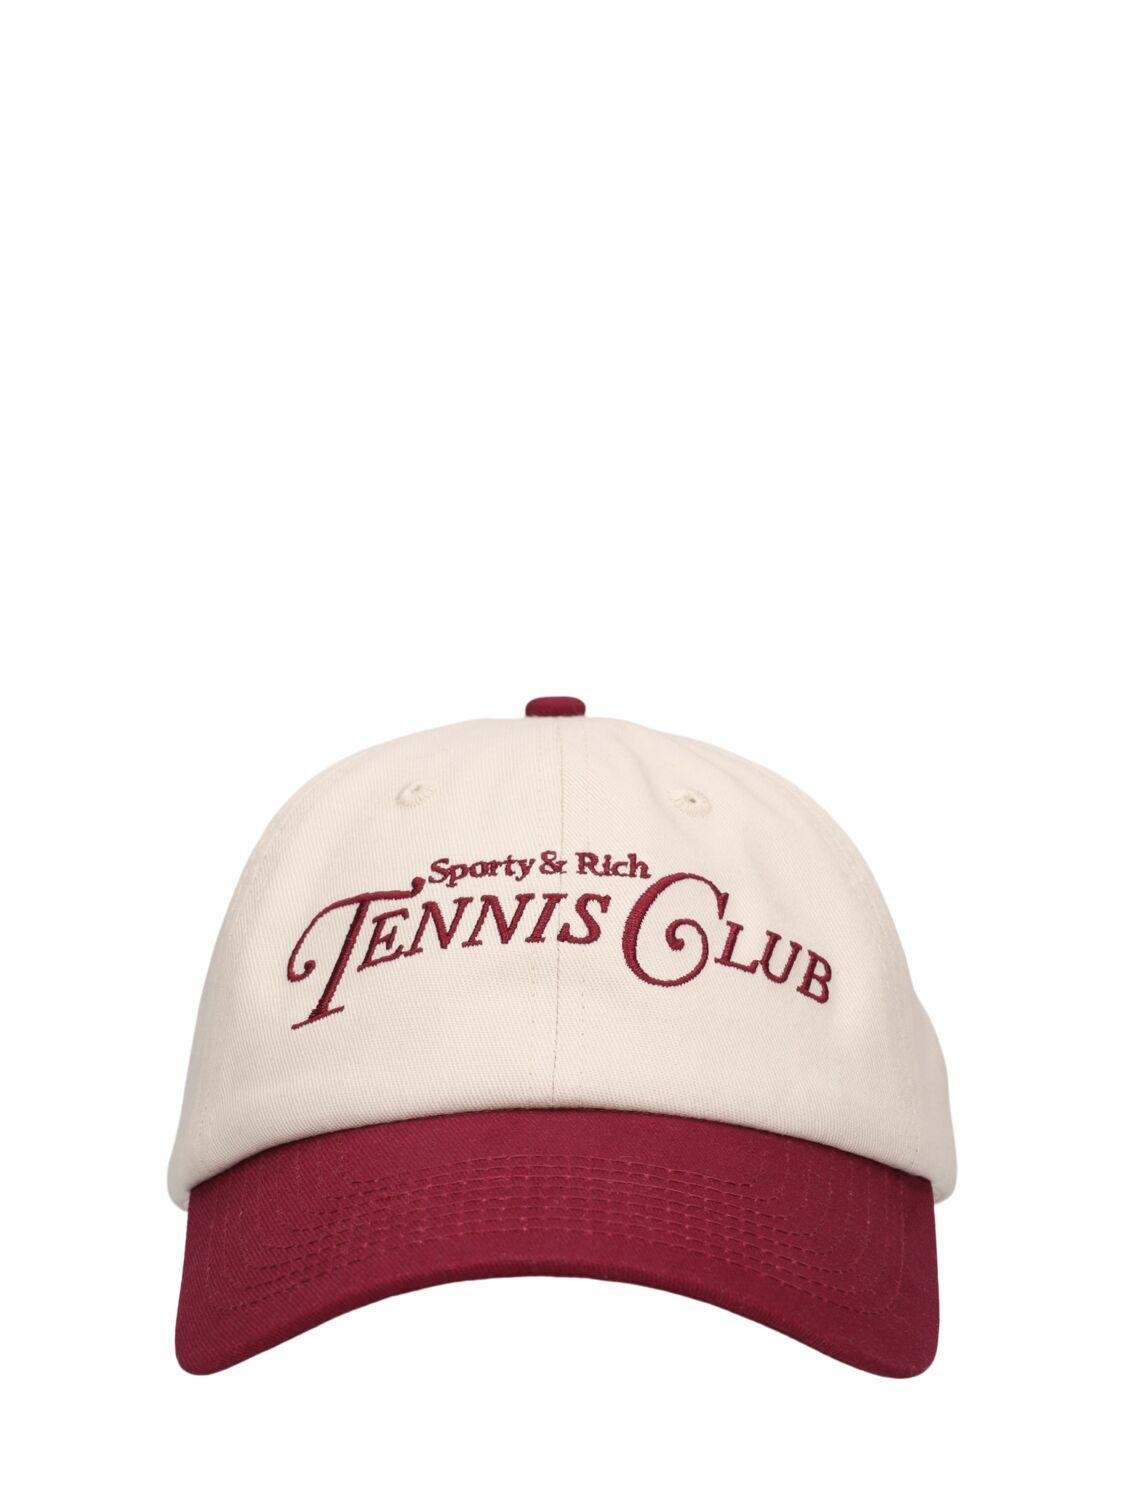 Rizzoli Tennis Unisex Hat by SPORTY&RICH